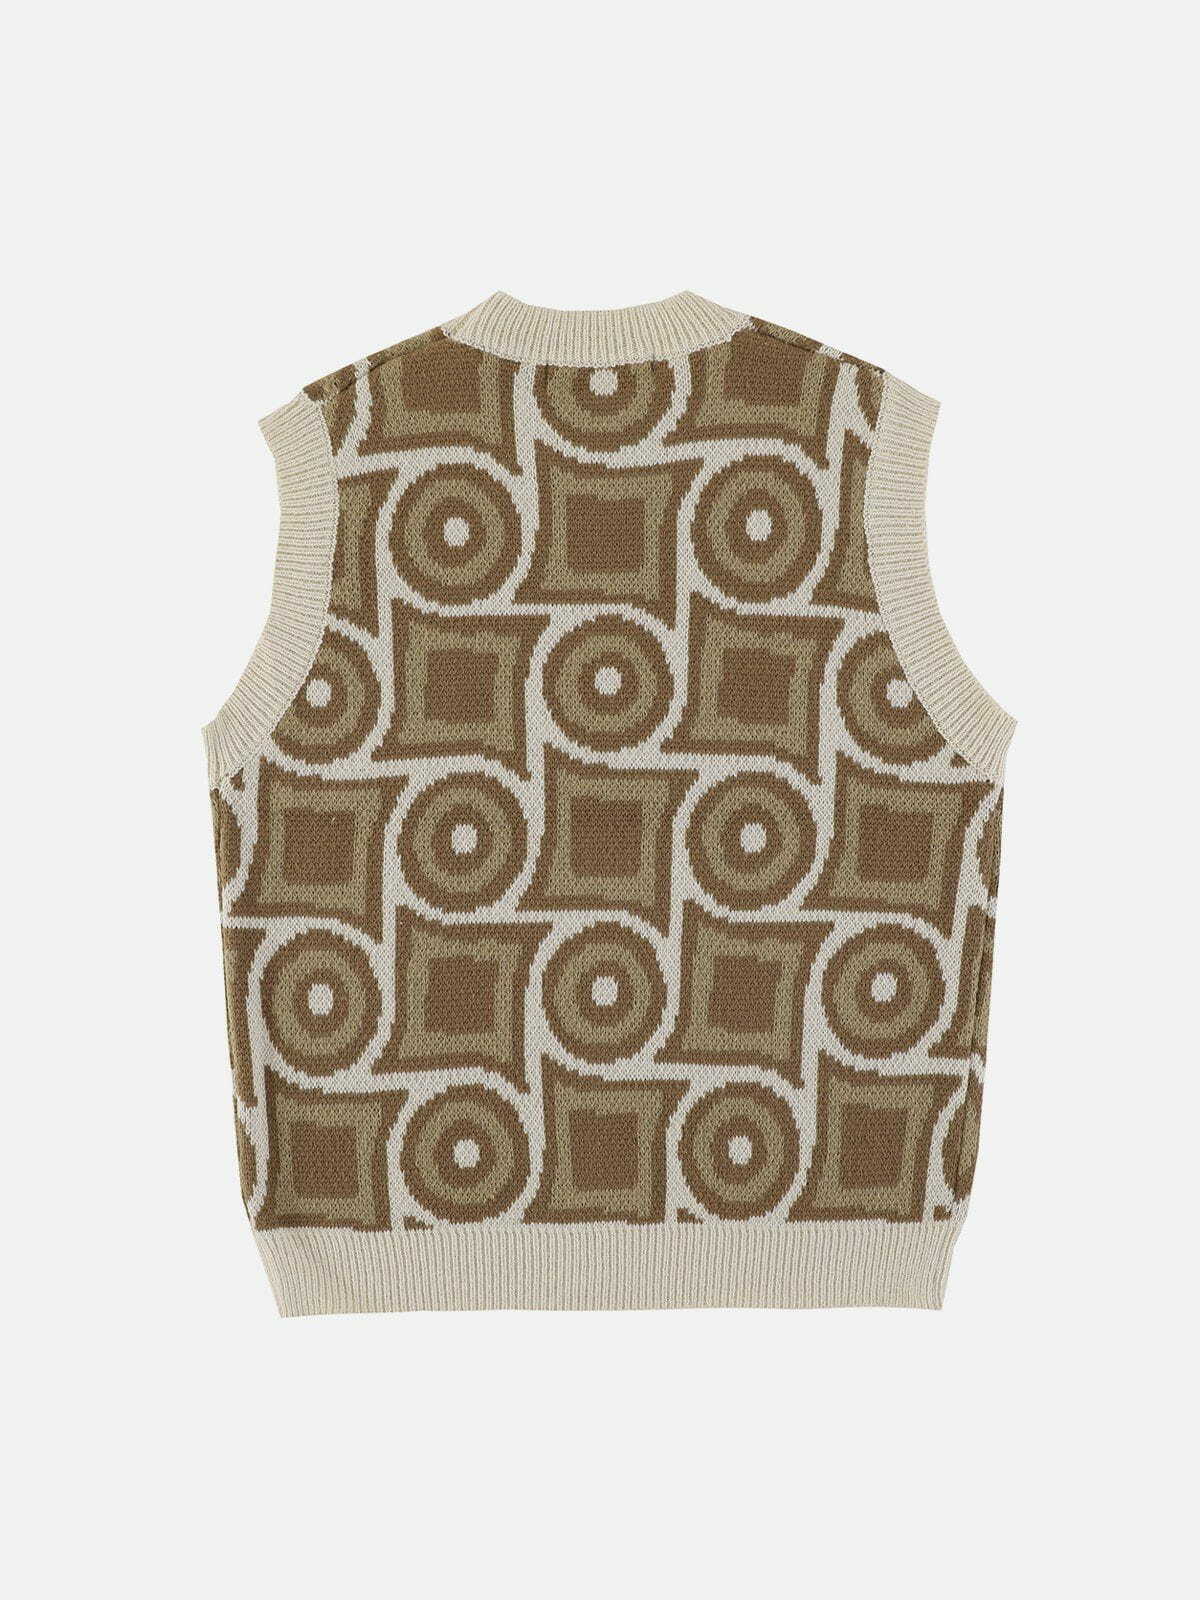 revolutionary geometric sweater vest edgy y2k streetwear essential 2025